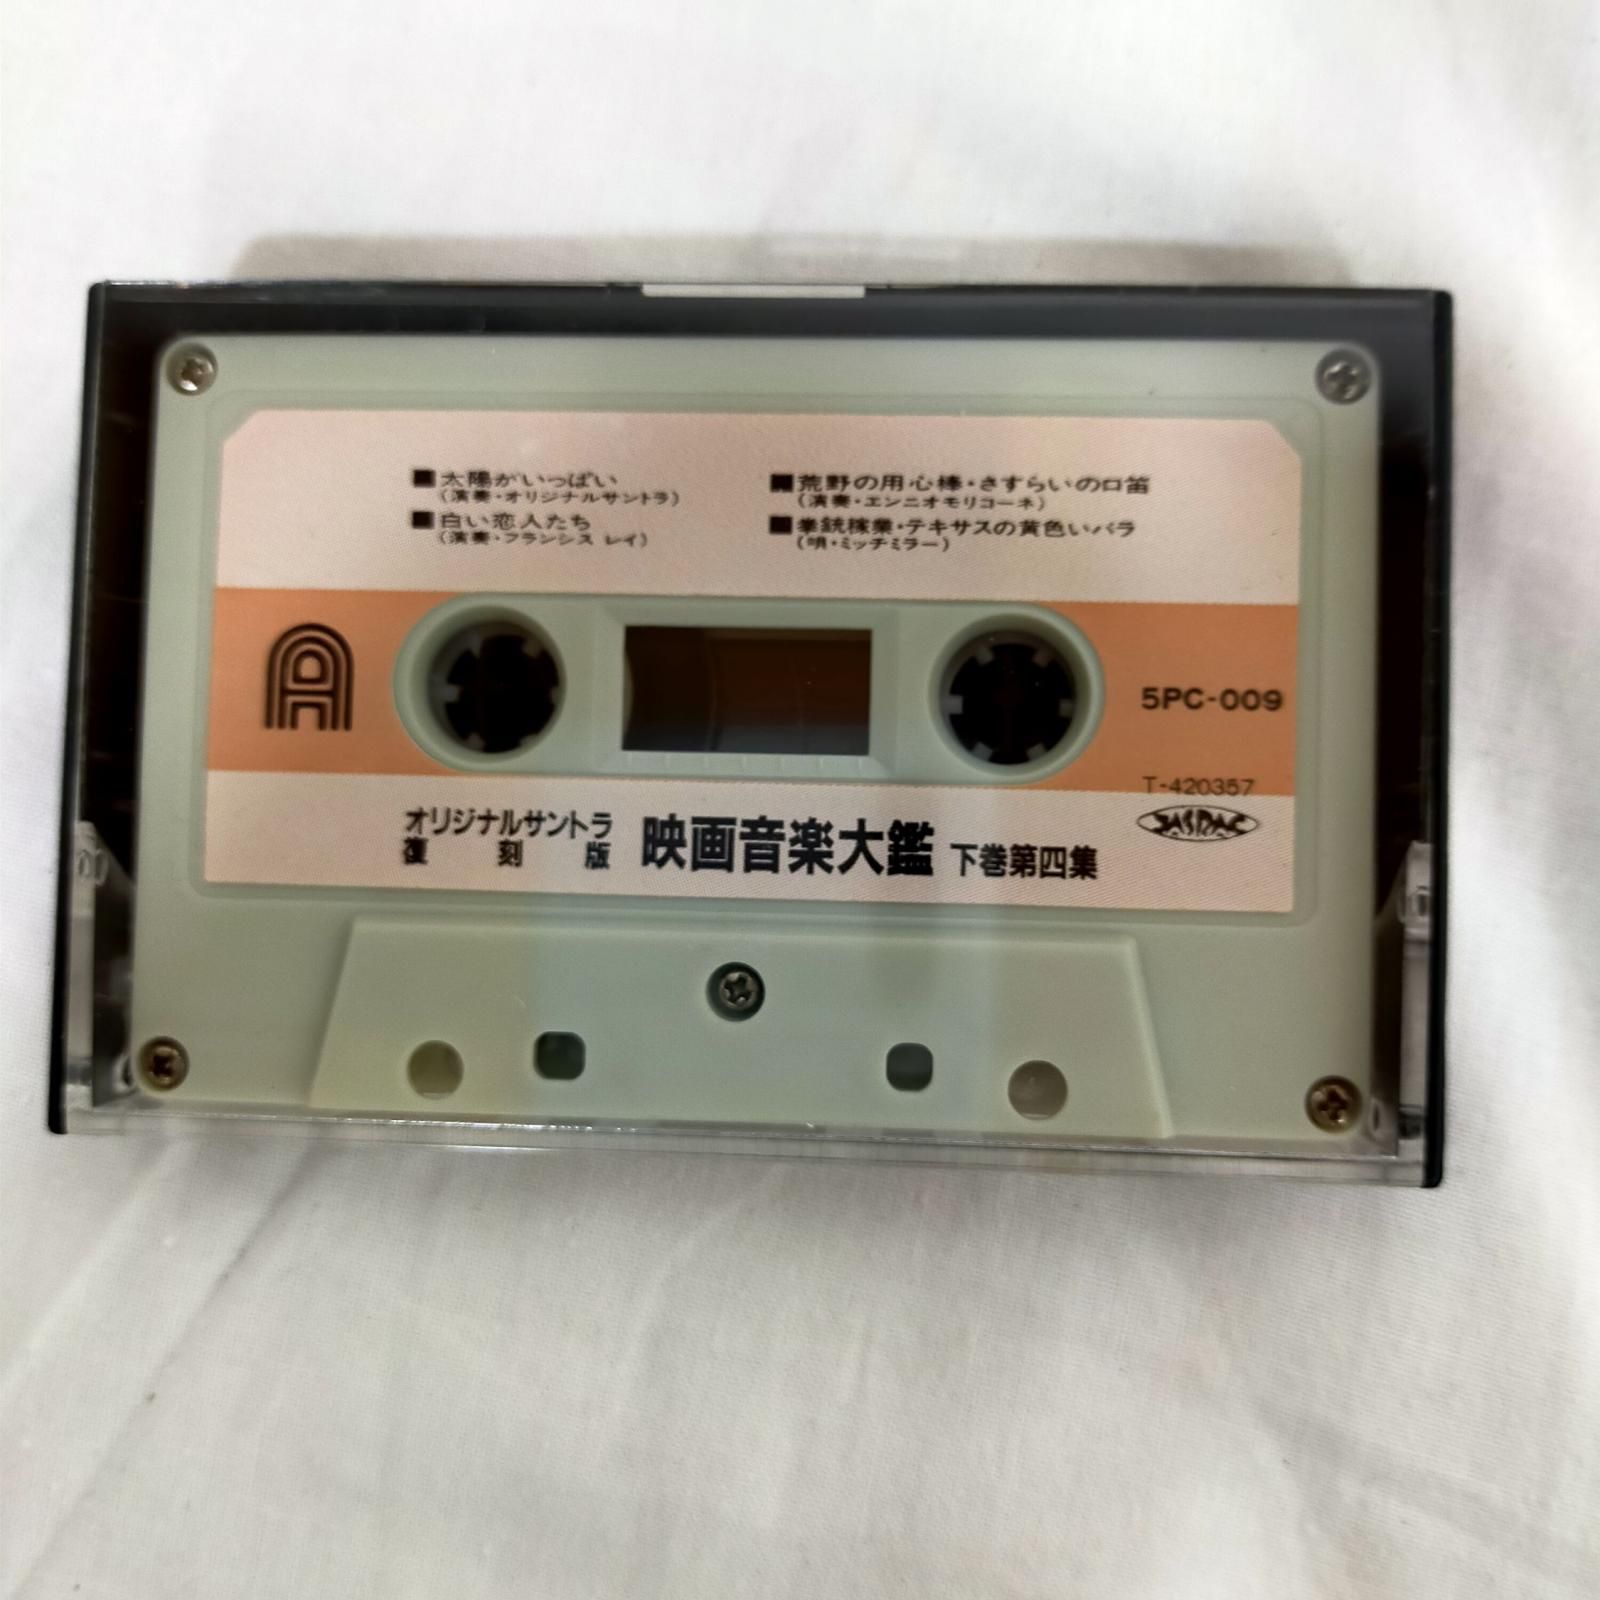 カセットテープ【中古】 映画音楽大鑑下巻 復刻版 5巻組 全40曲 